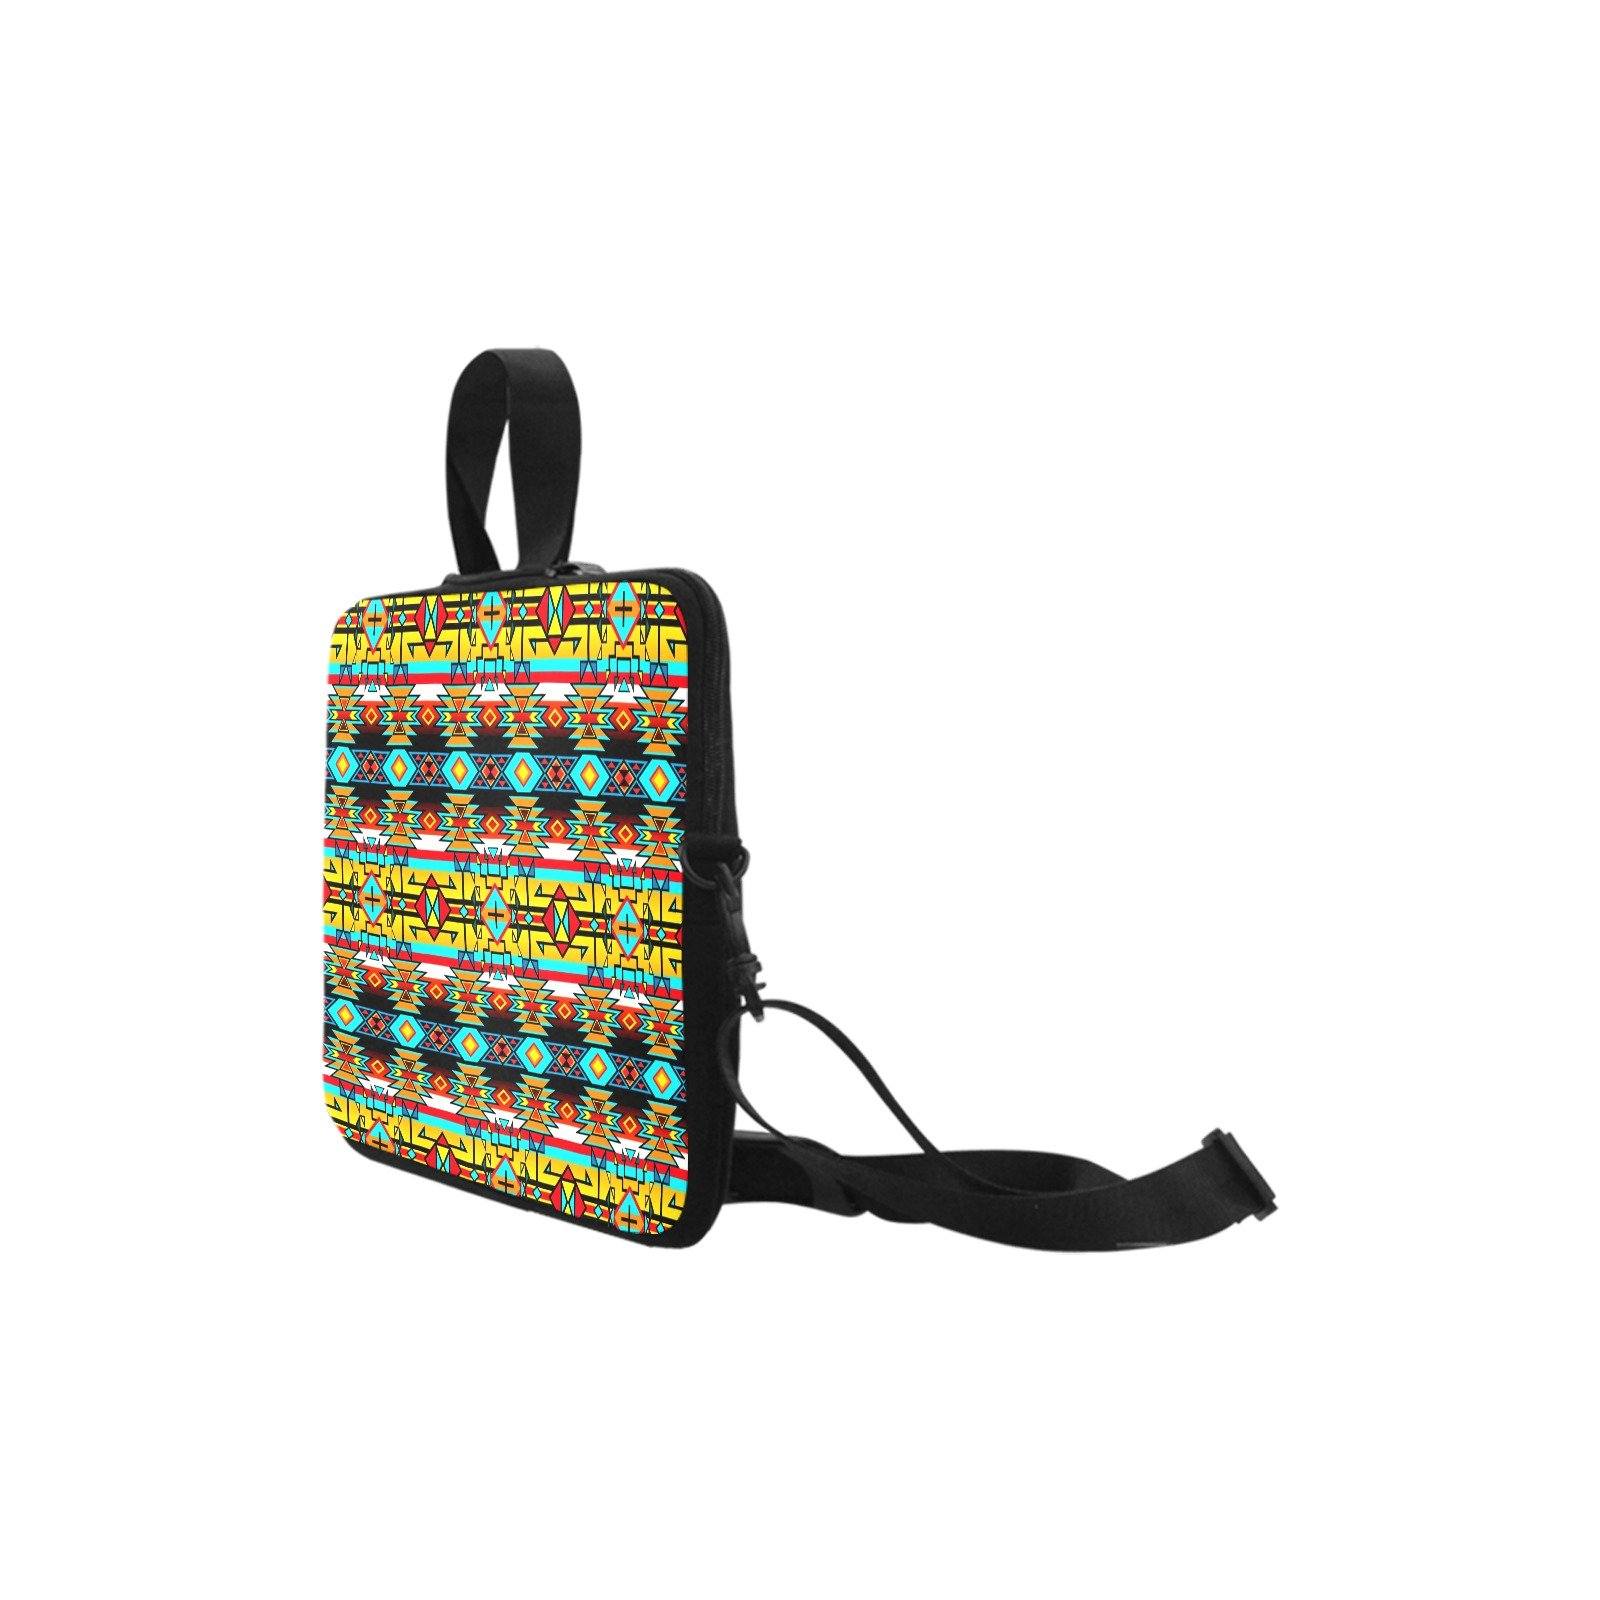 Force of Nature Twister Laptop Handbags 17" bag e-joyer 